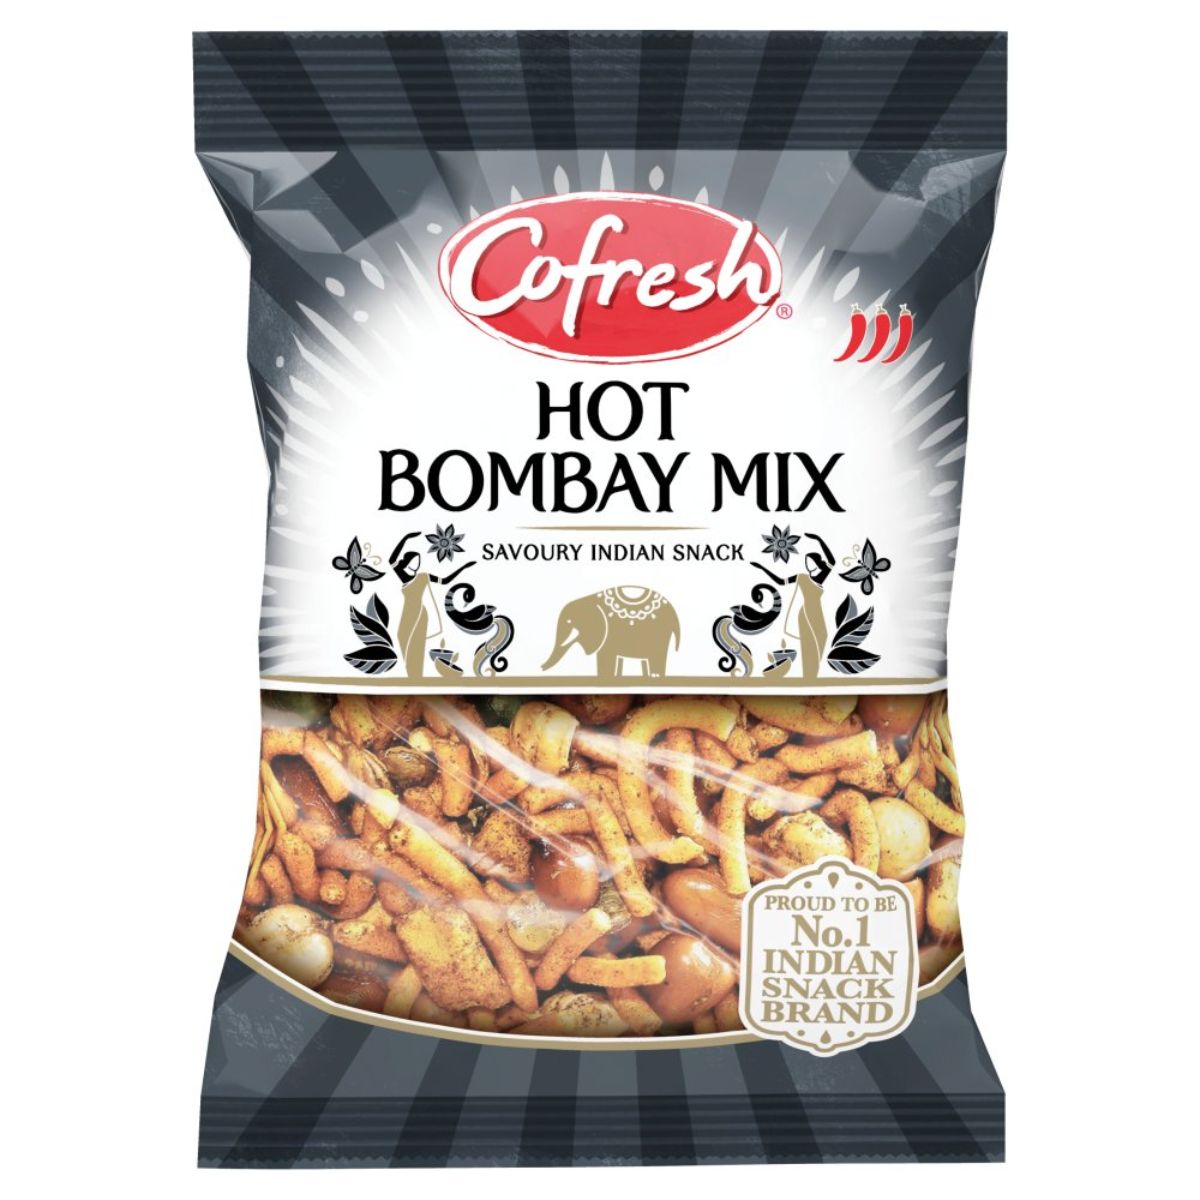 Cofresh - Hot Bombay Mix Savoury Indian Snack - 325g off